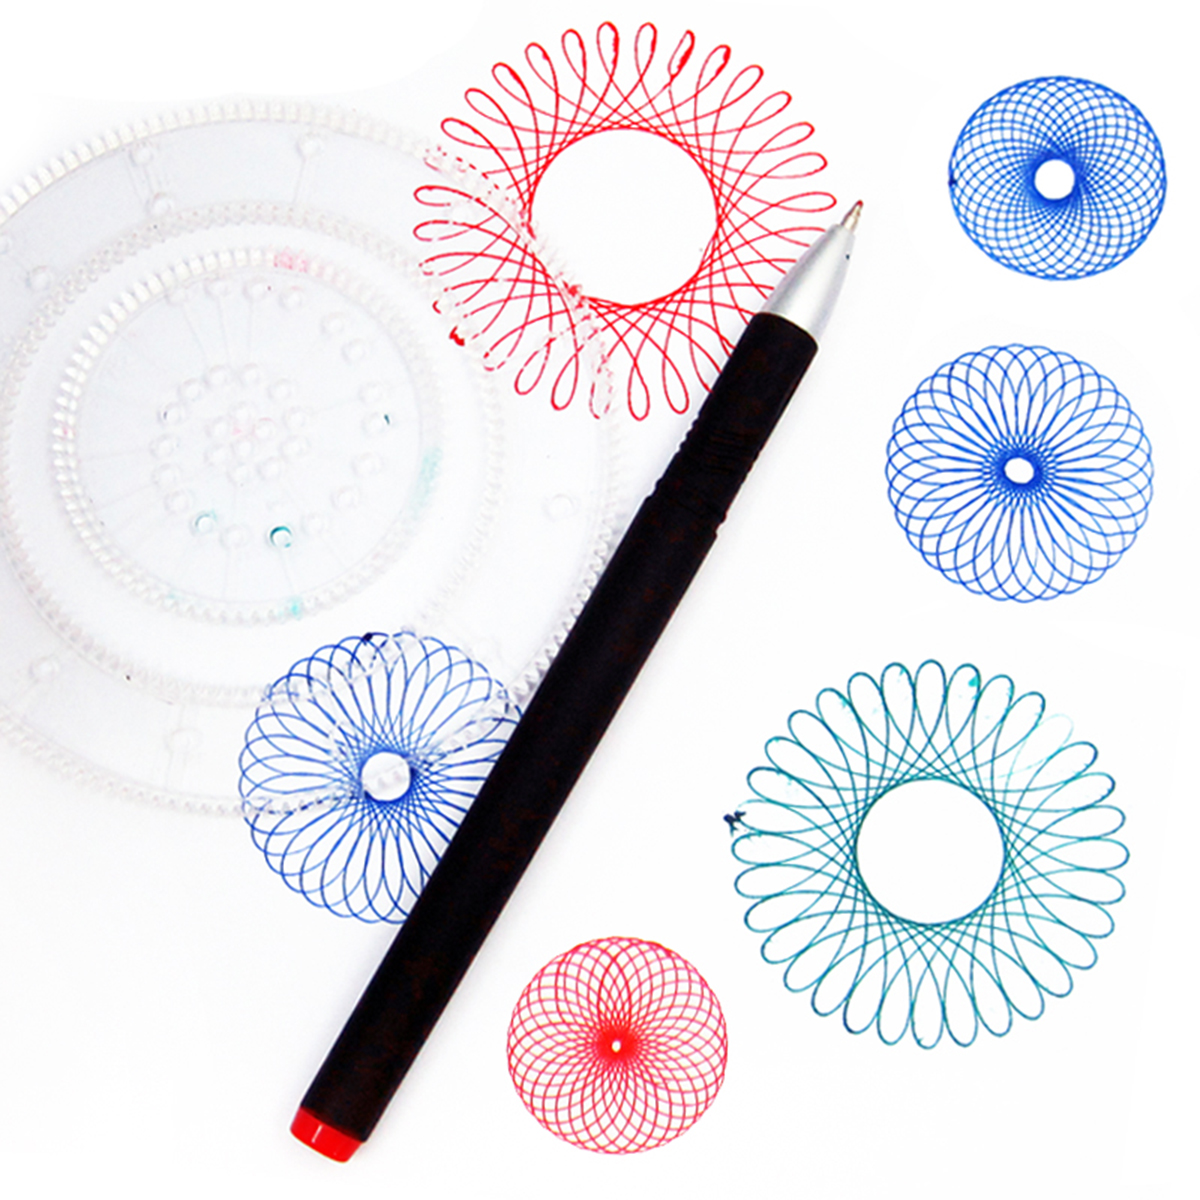 Original Spirograph Design Set Geometric Drawing Ruler Kids Spiral Art Craft Creation Education Toy 116